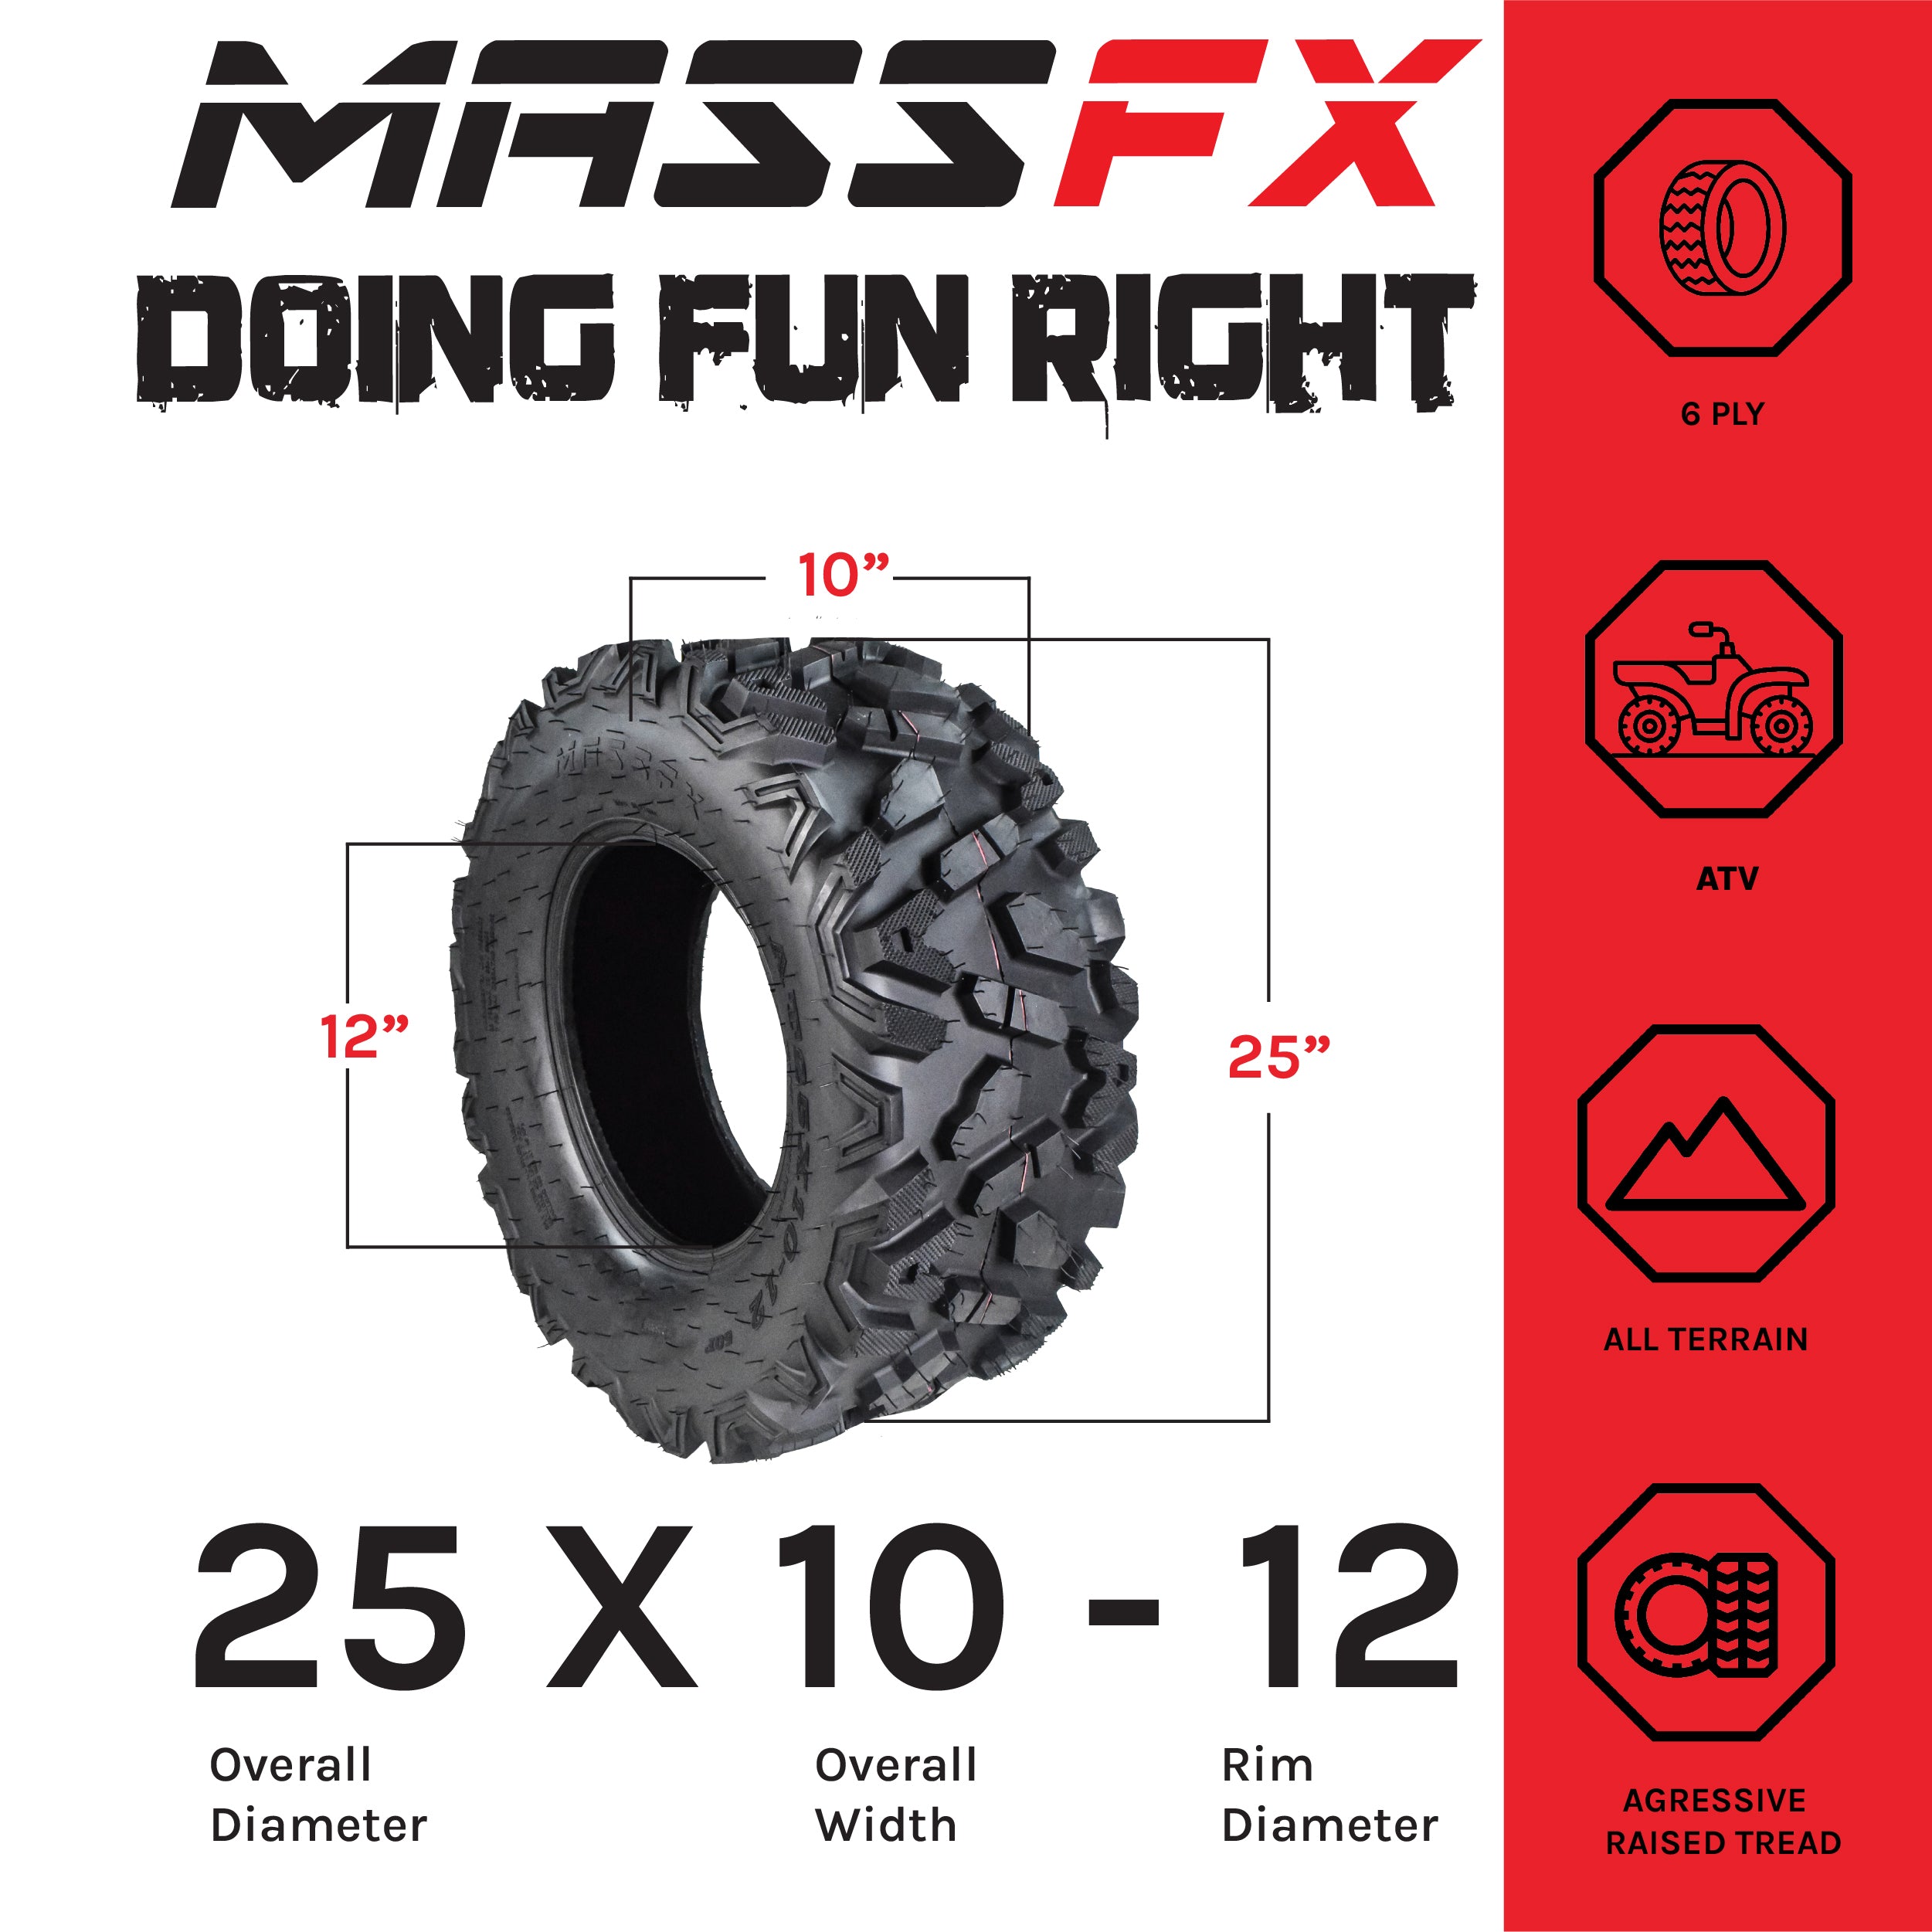 MASSFX-QL251012-6PLY-25-25x10-12-Rear-ATV-Tire-25x10x12-image-1